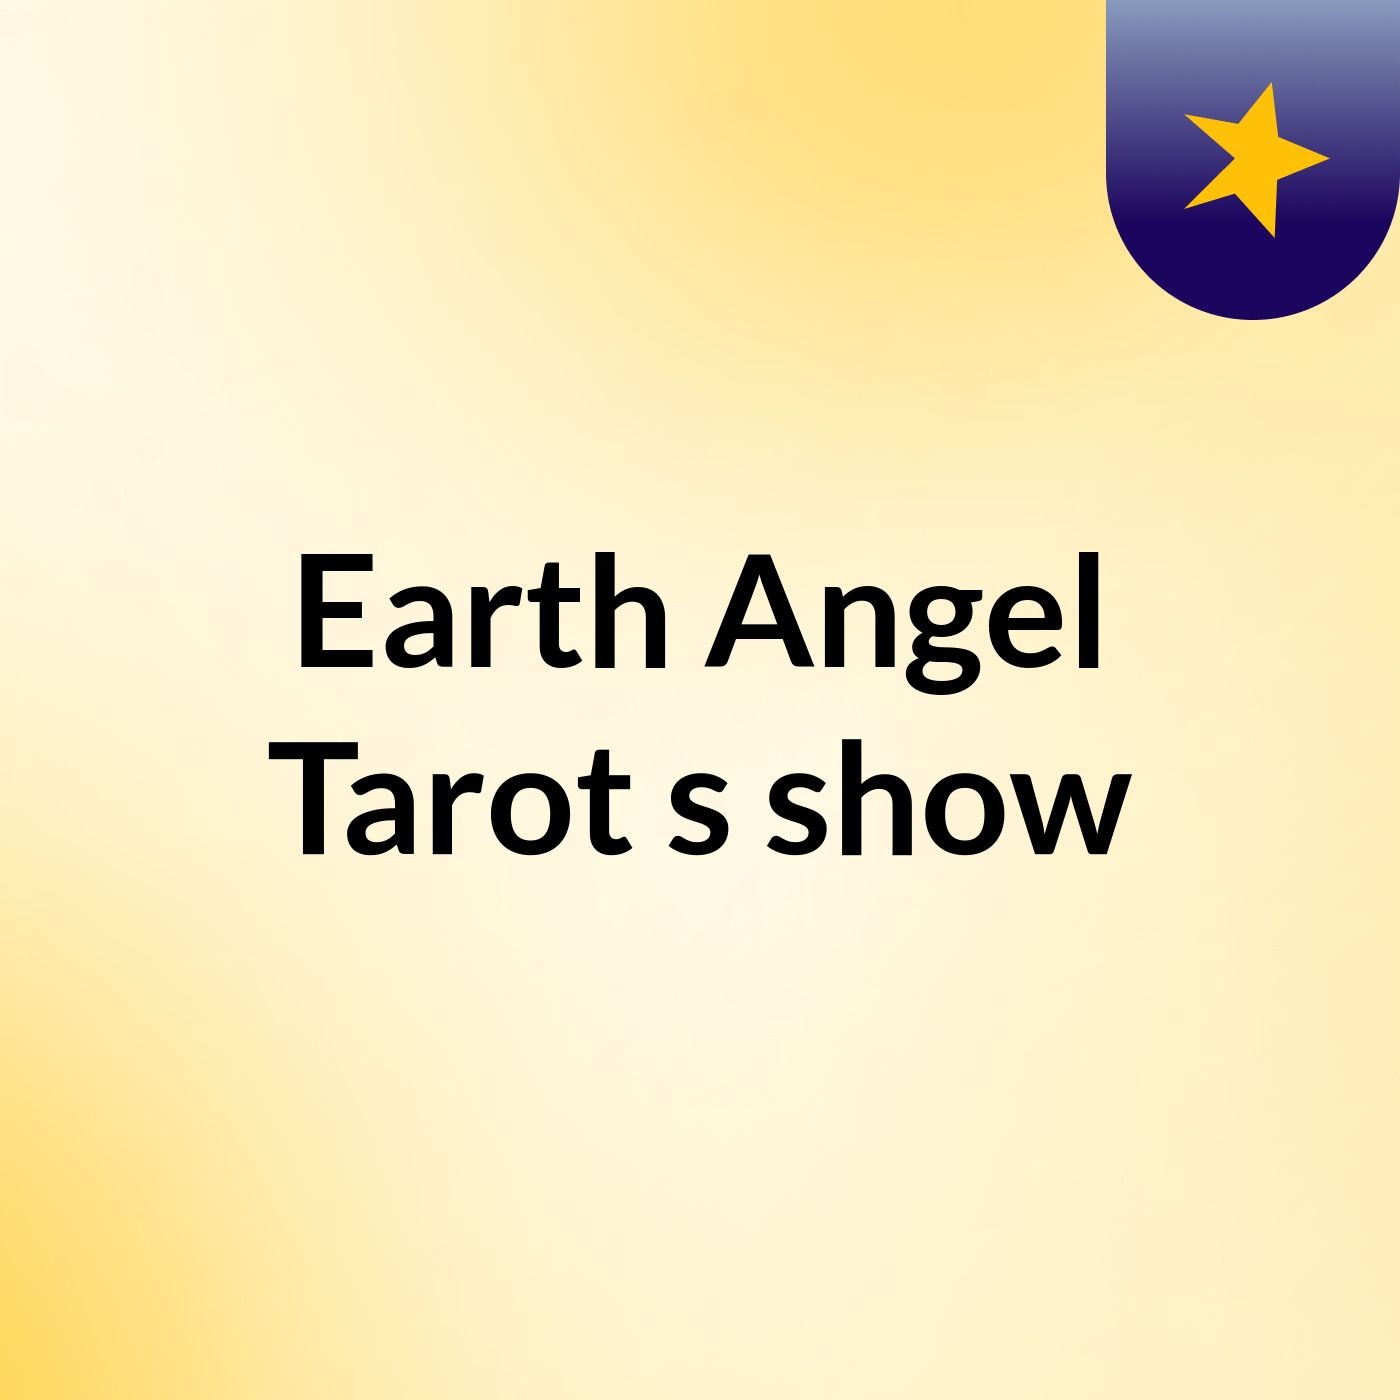 Earth Angel Tarot's show